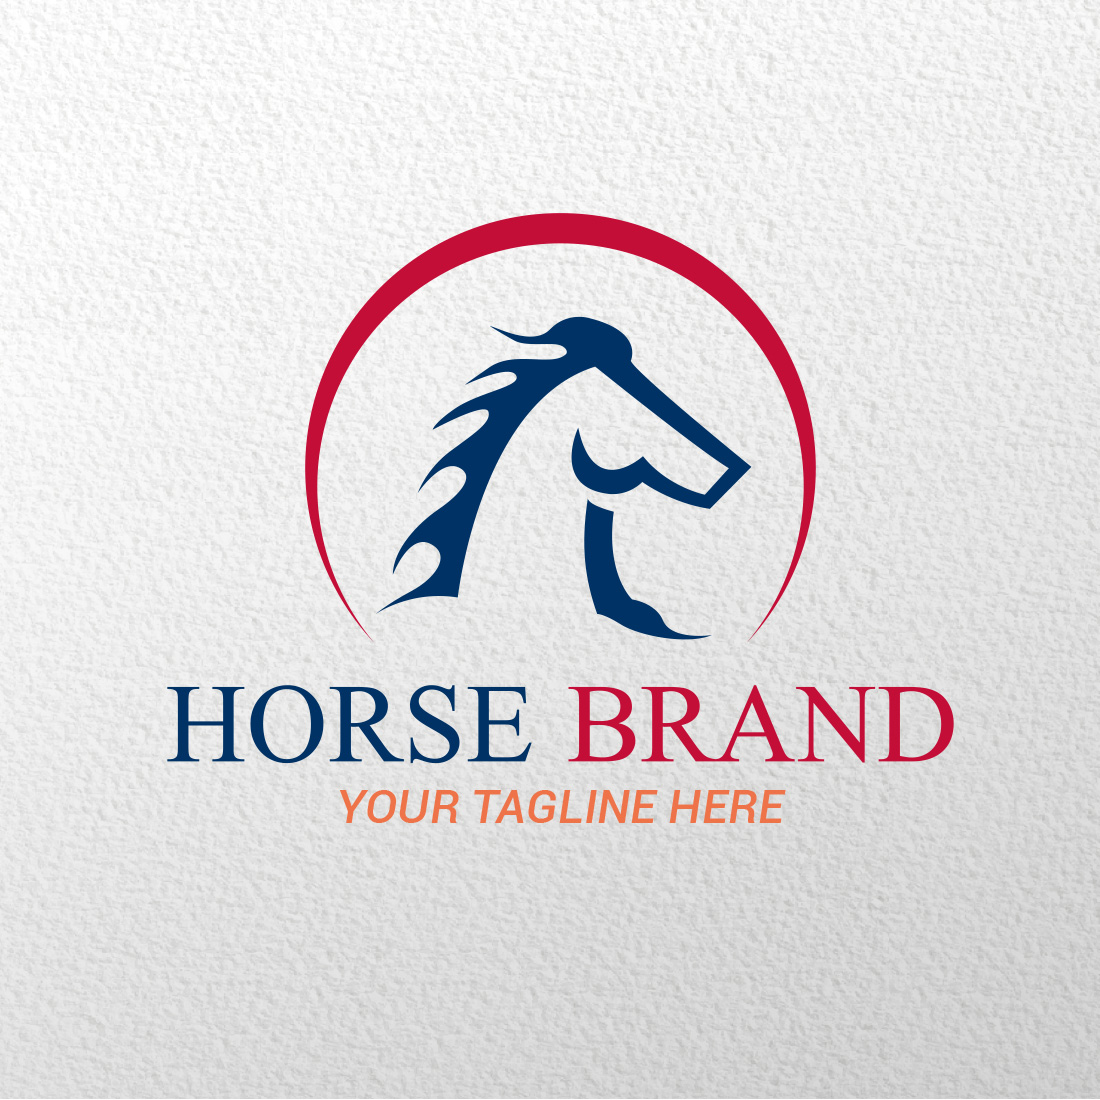 Horse brand logo design cover image.